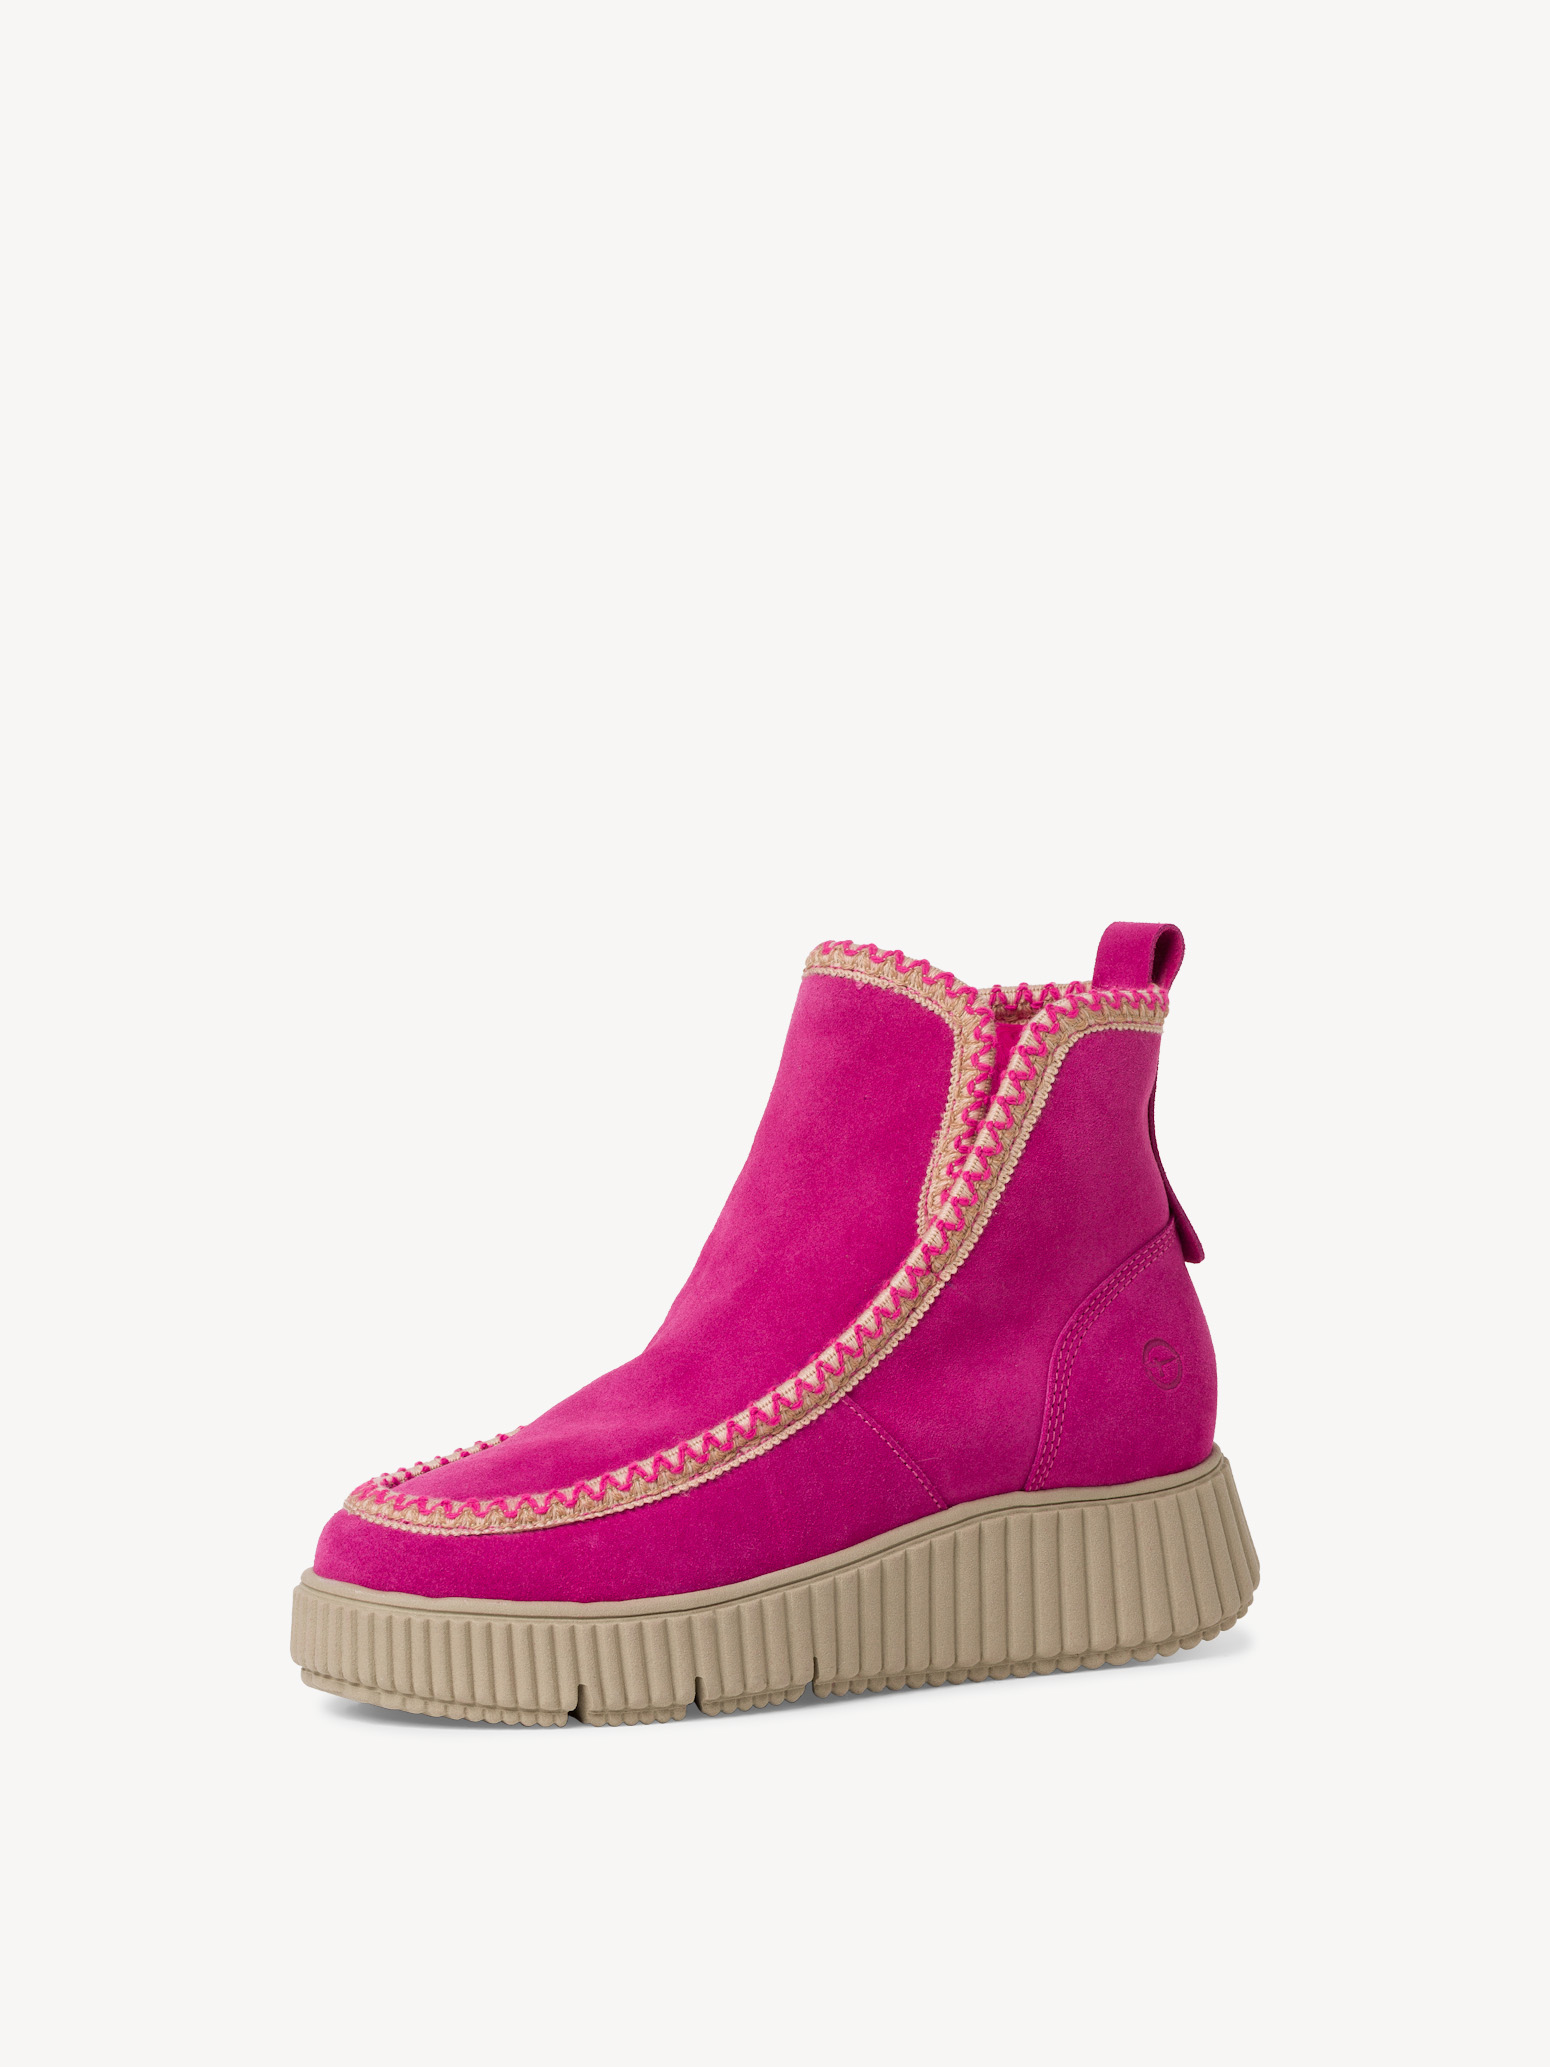 1-26865-41-513: Boots Lederstiefelette kaufen! online & pink Stiefeletten Tamaris - Warmfutter